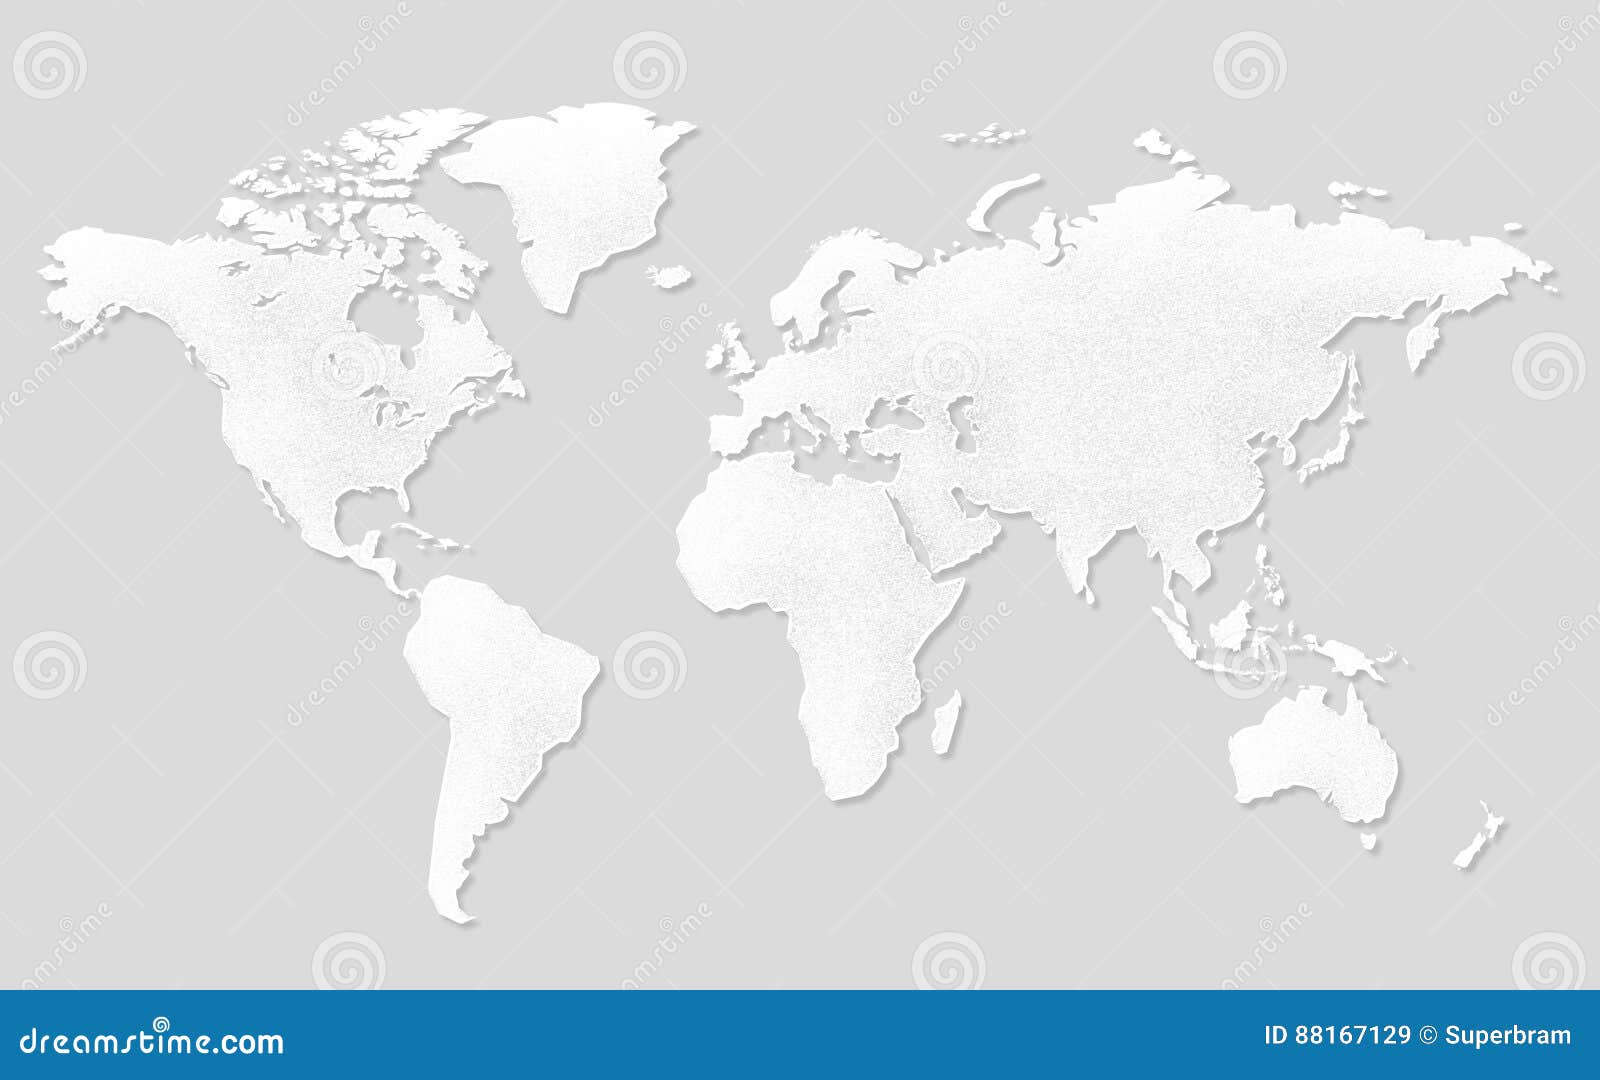 world map presentation background